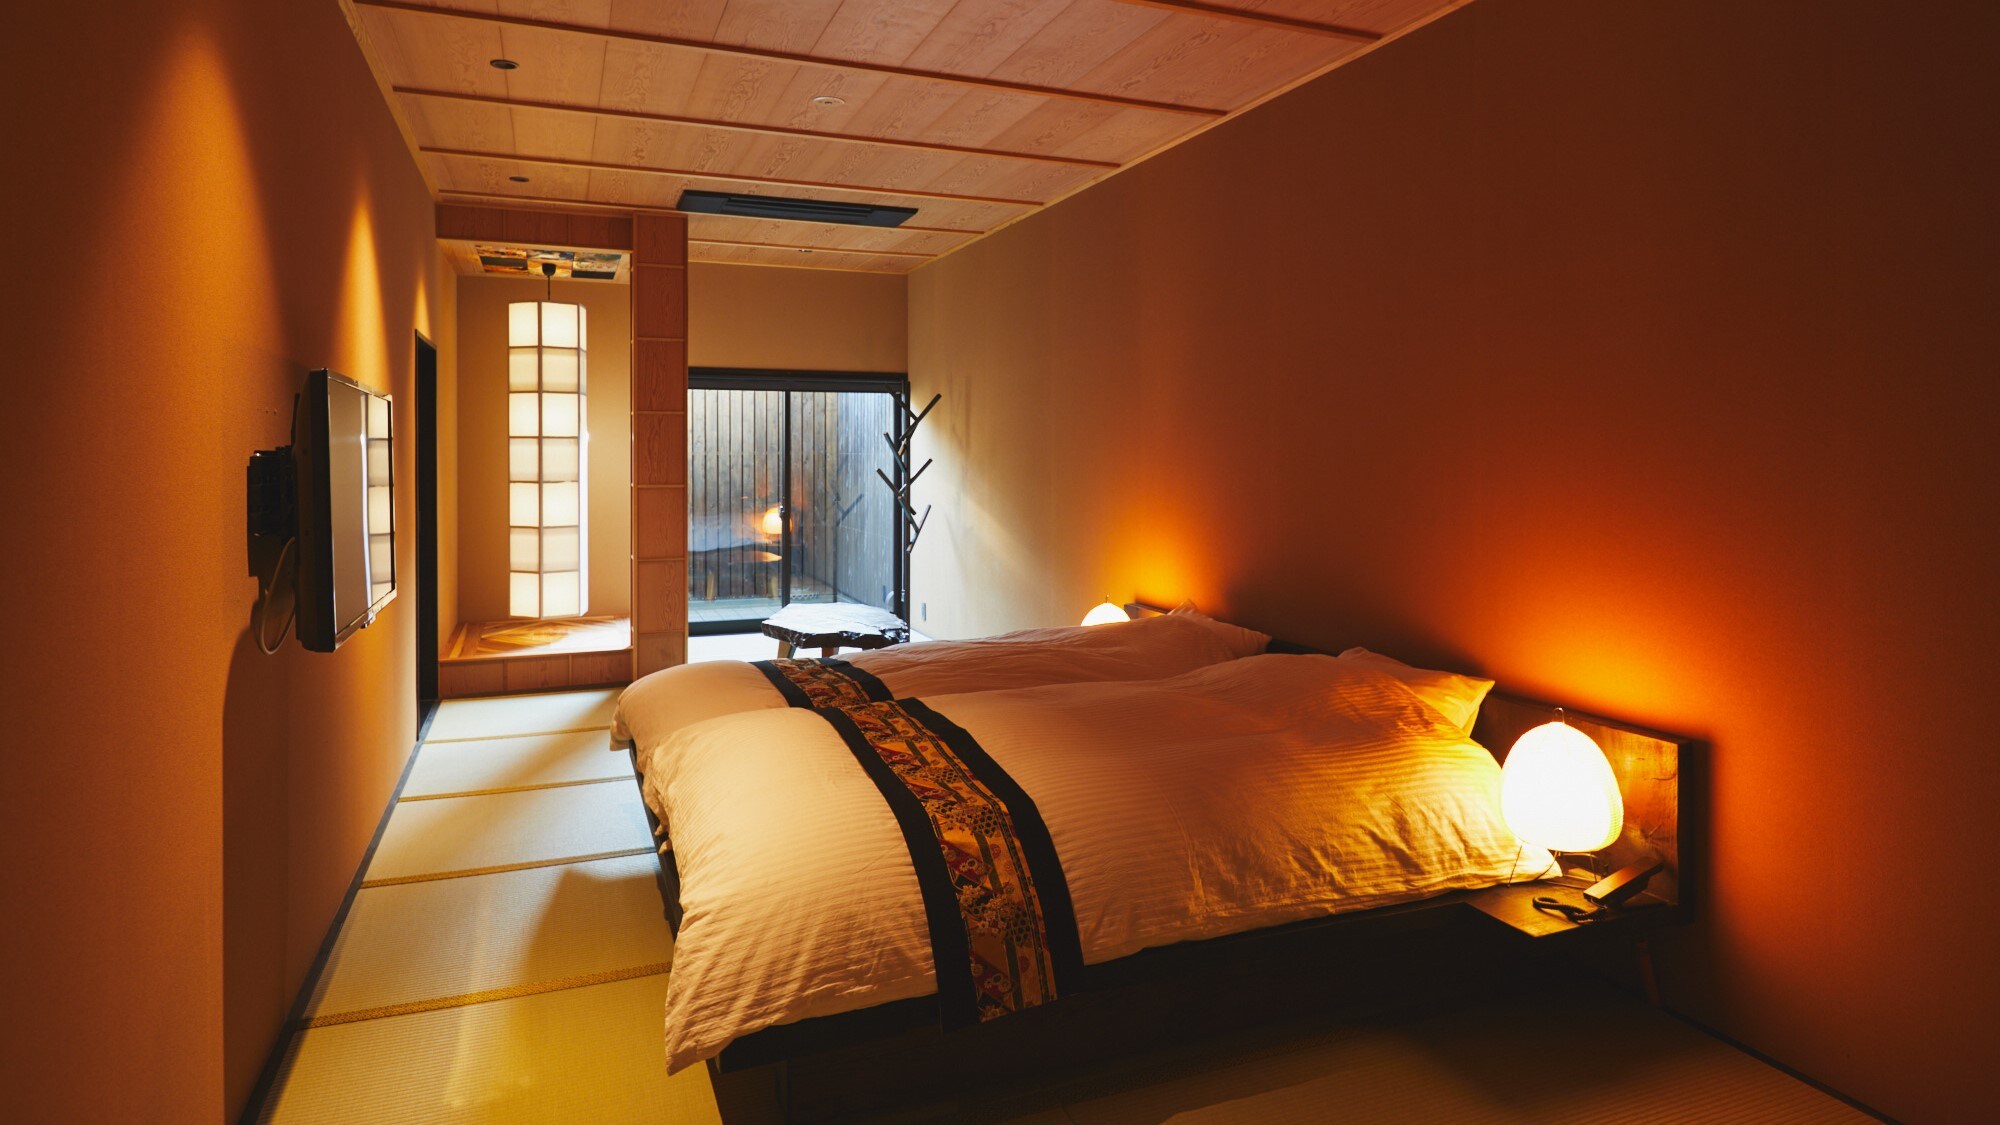 Bosom-kai-Designer's guest room with open-air bath